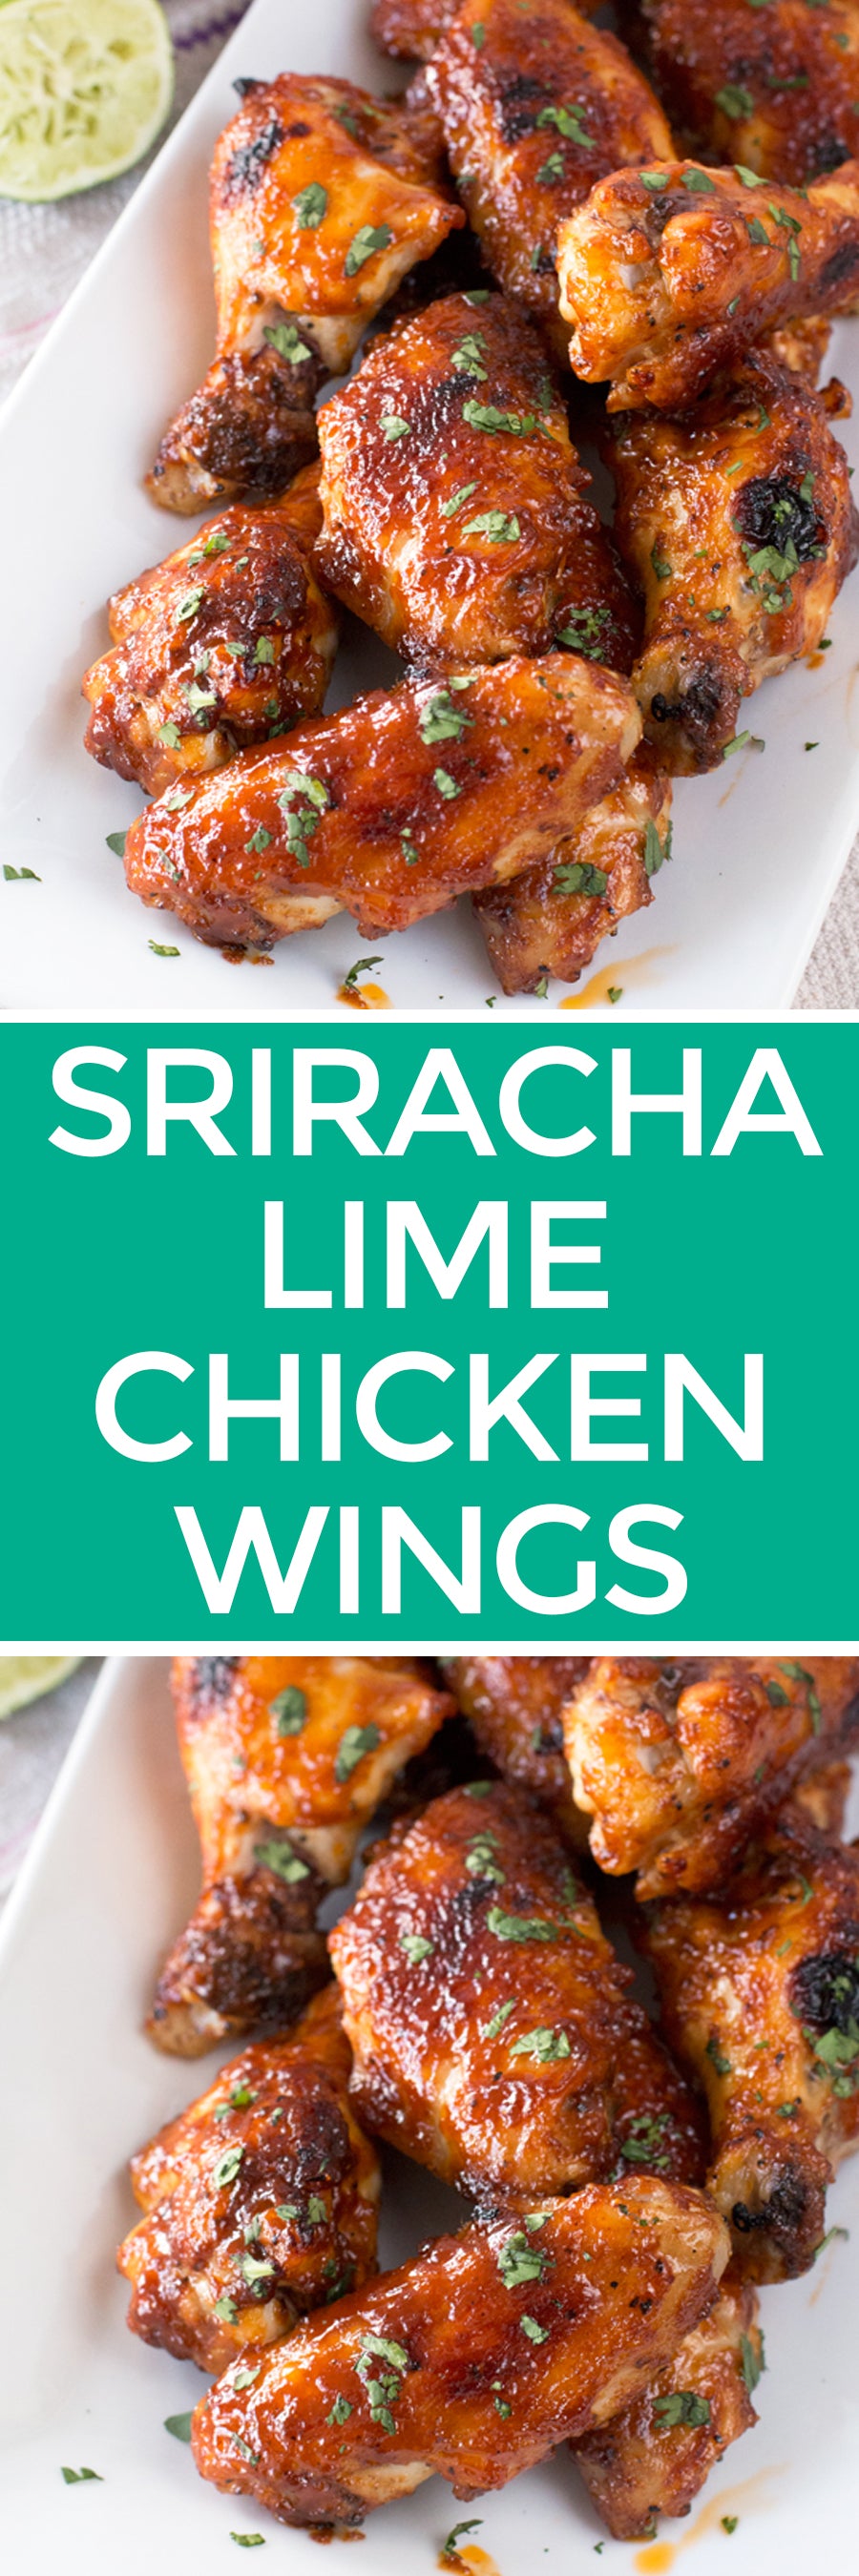 Sriracha Lime Chicken Wings | pigofthemonth.com